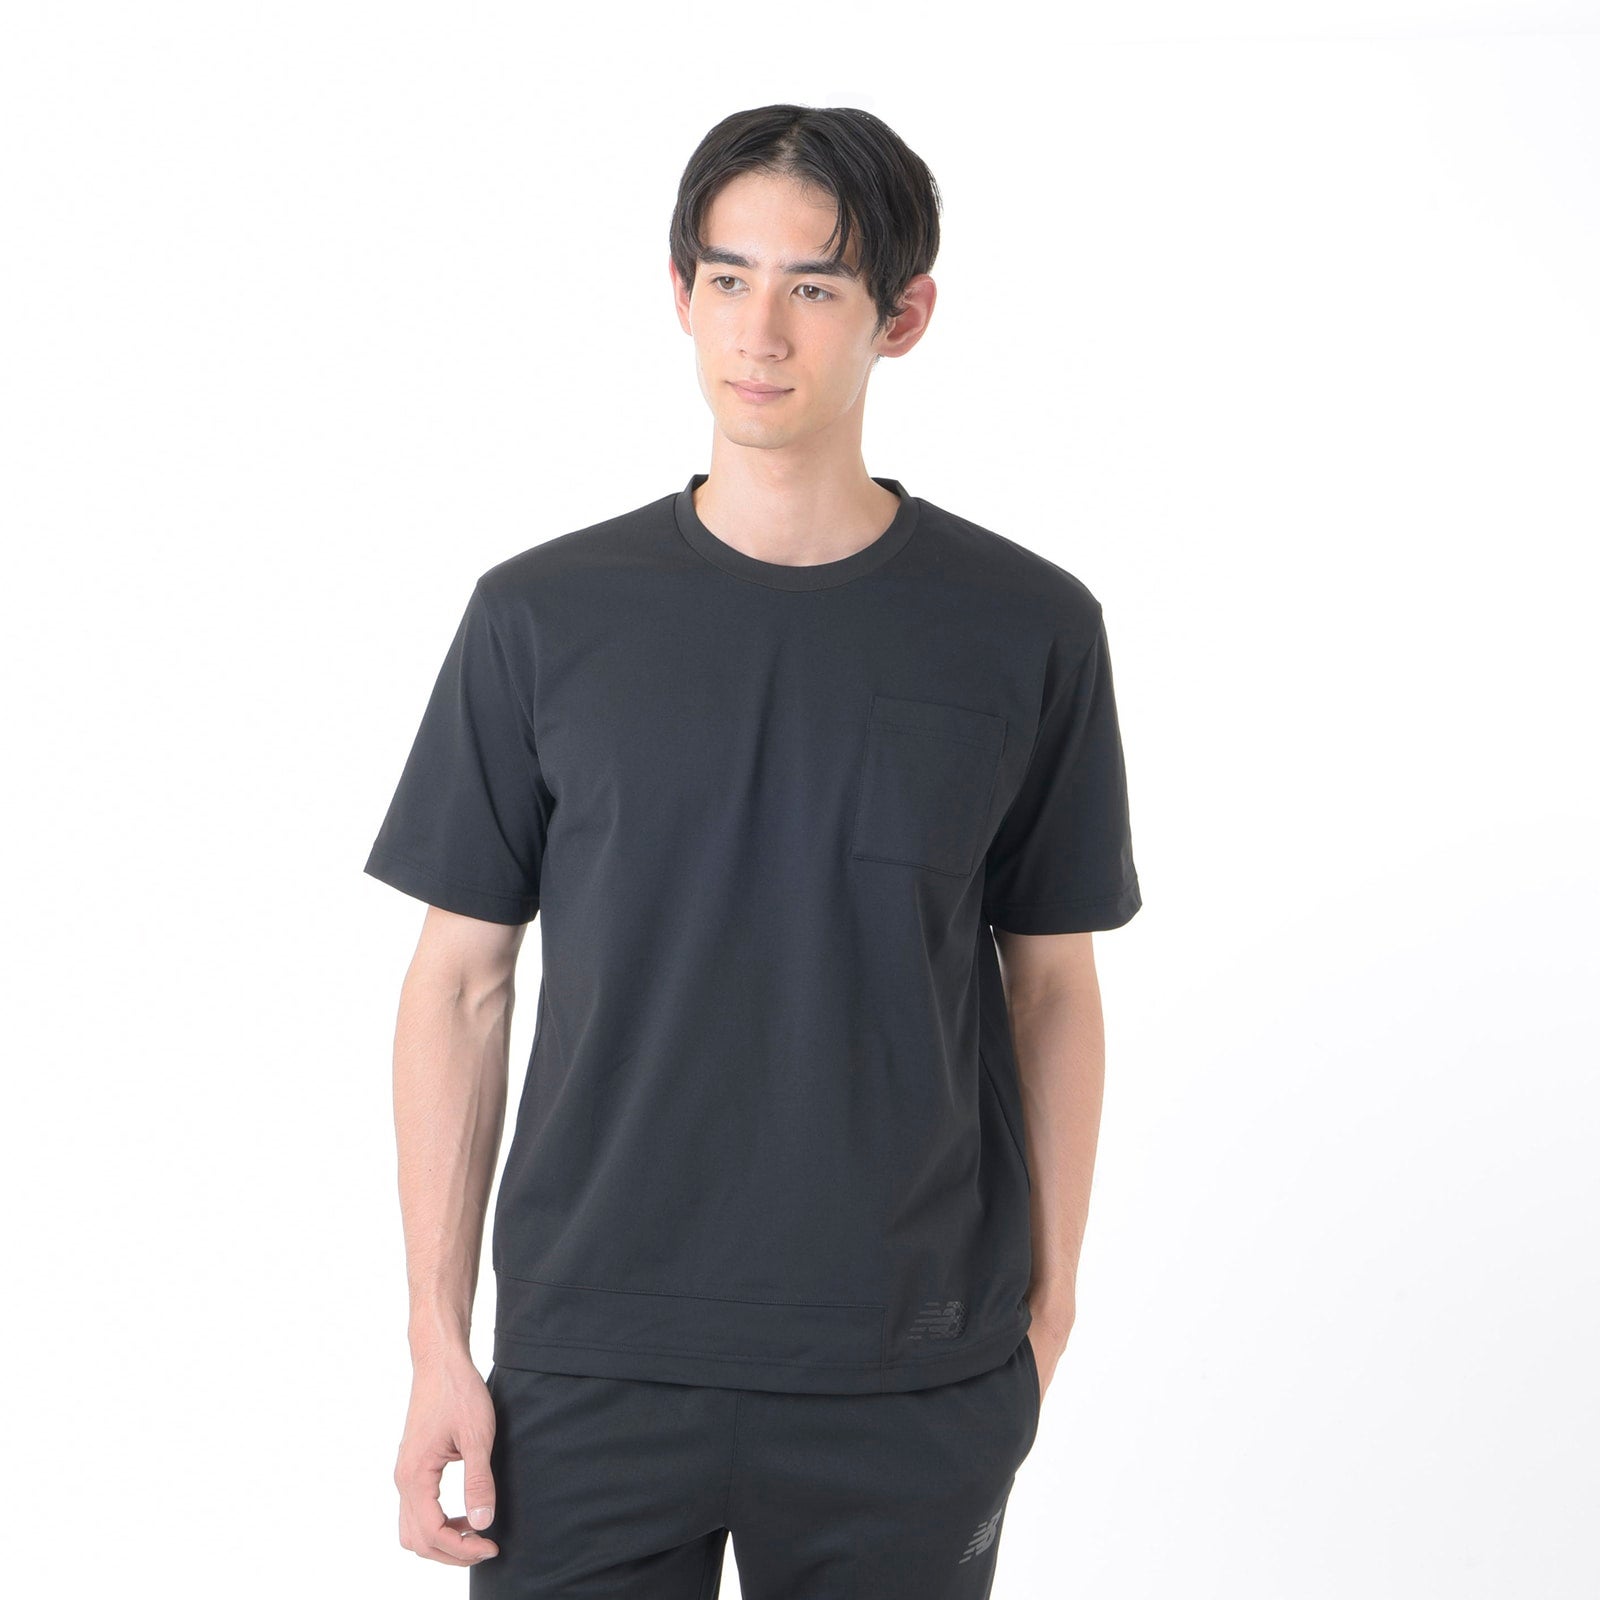 Black Out Collection超值版棉质浅色商标短袖T恤